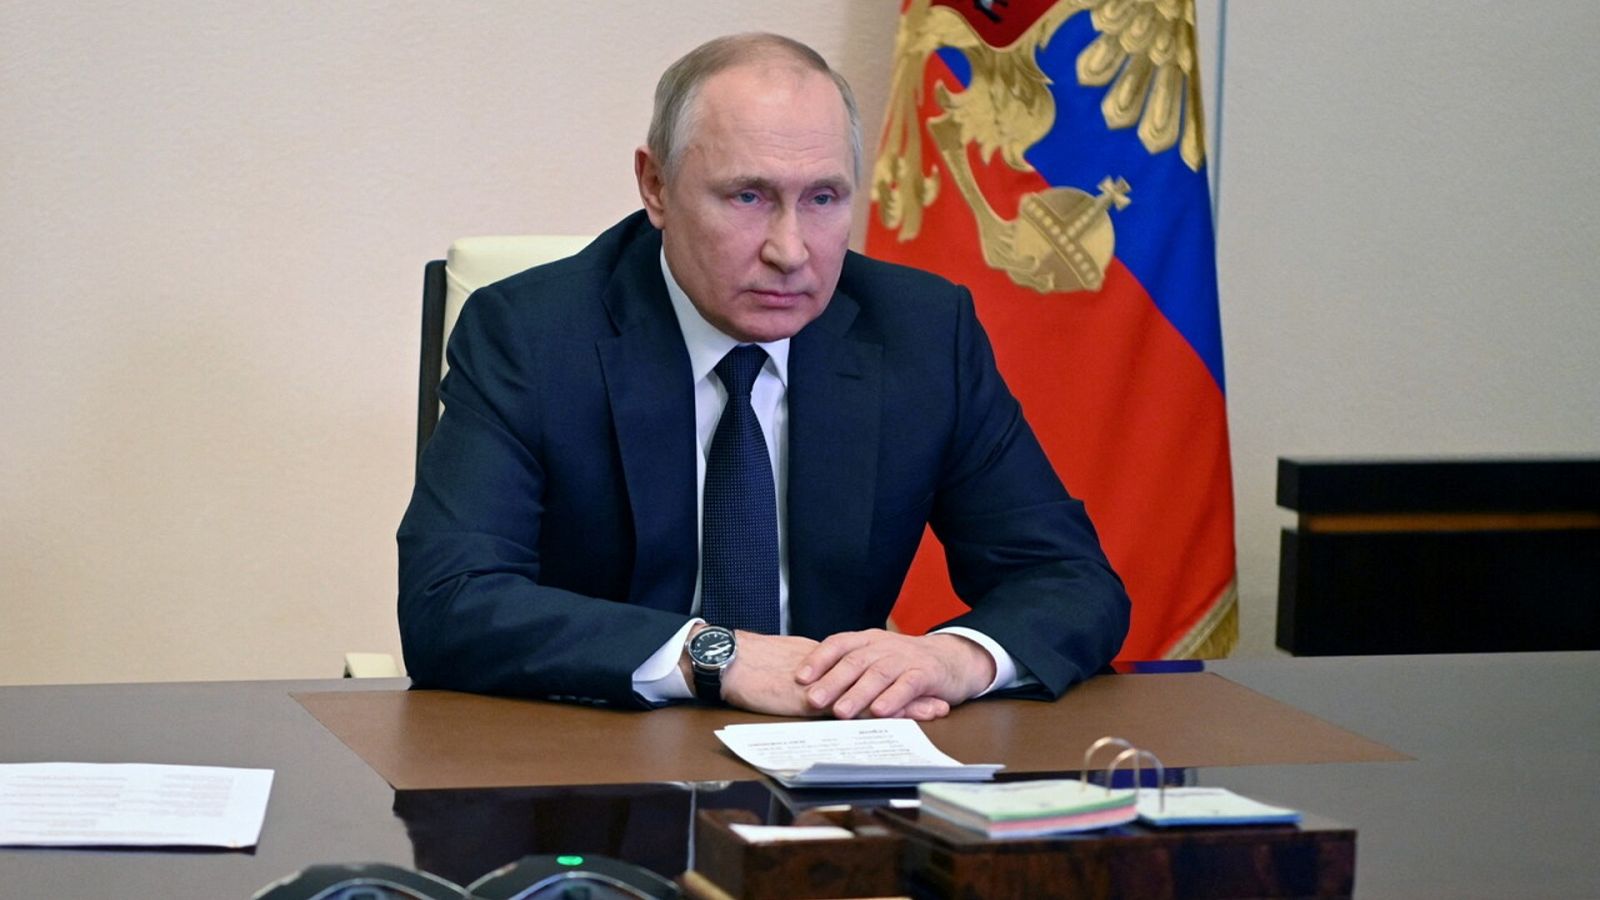 El presidente ruso, Vladímir Putin. Sputnik/Andrey Gorshkov/Kremlin via REUTERS